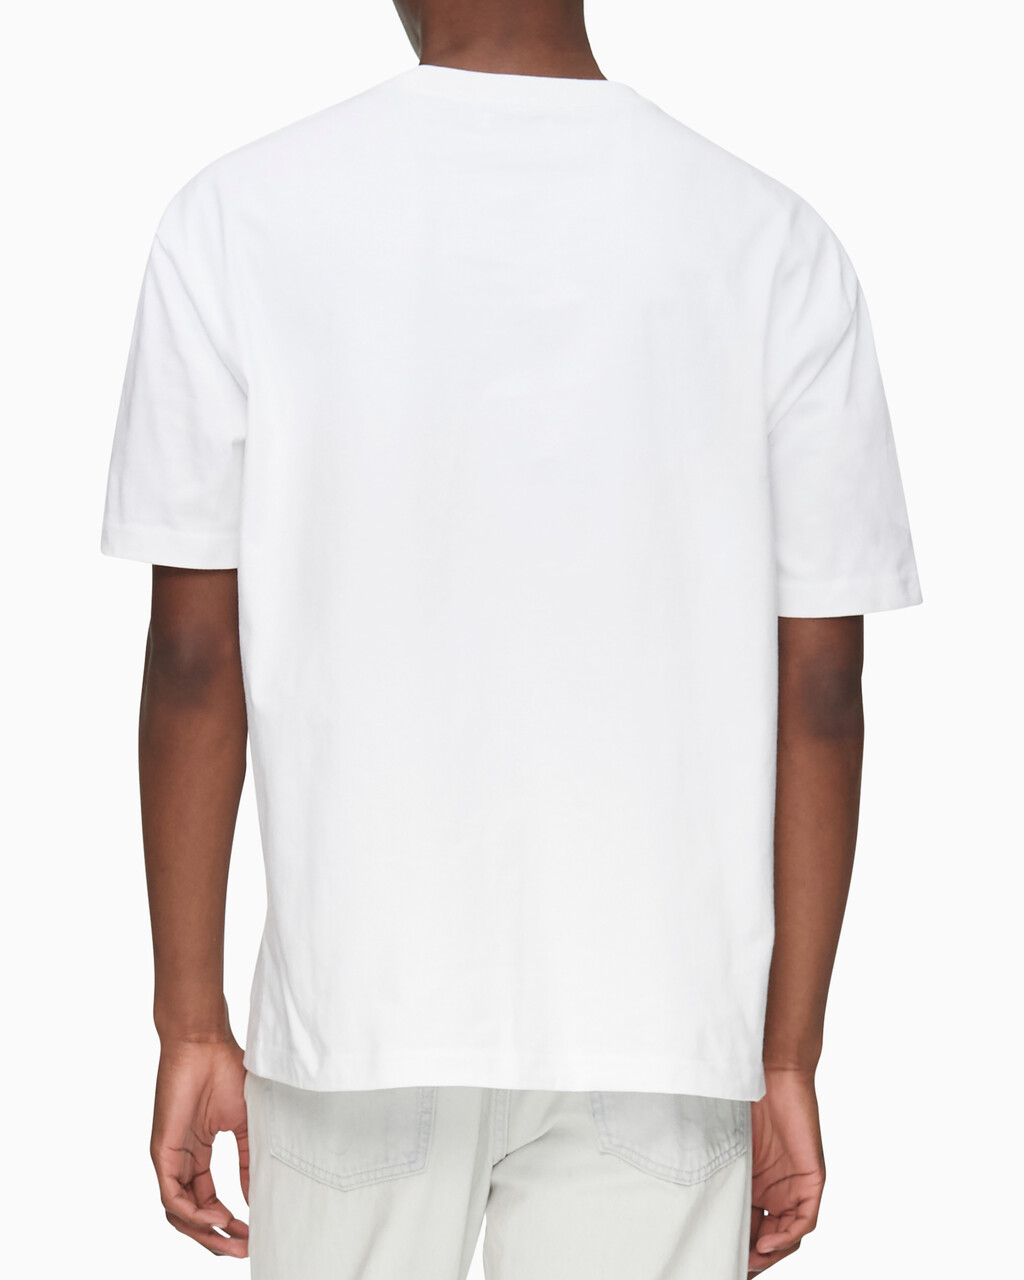 Calvin Logo 圓領上衣, BRILLIANT WHITE, hi-res